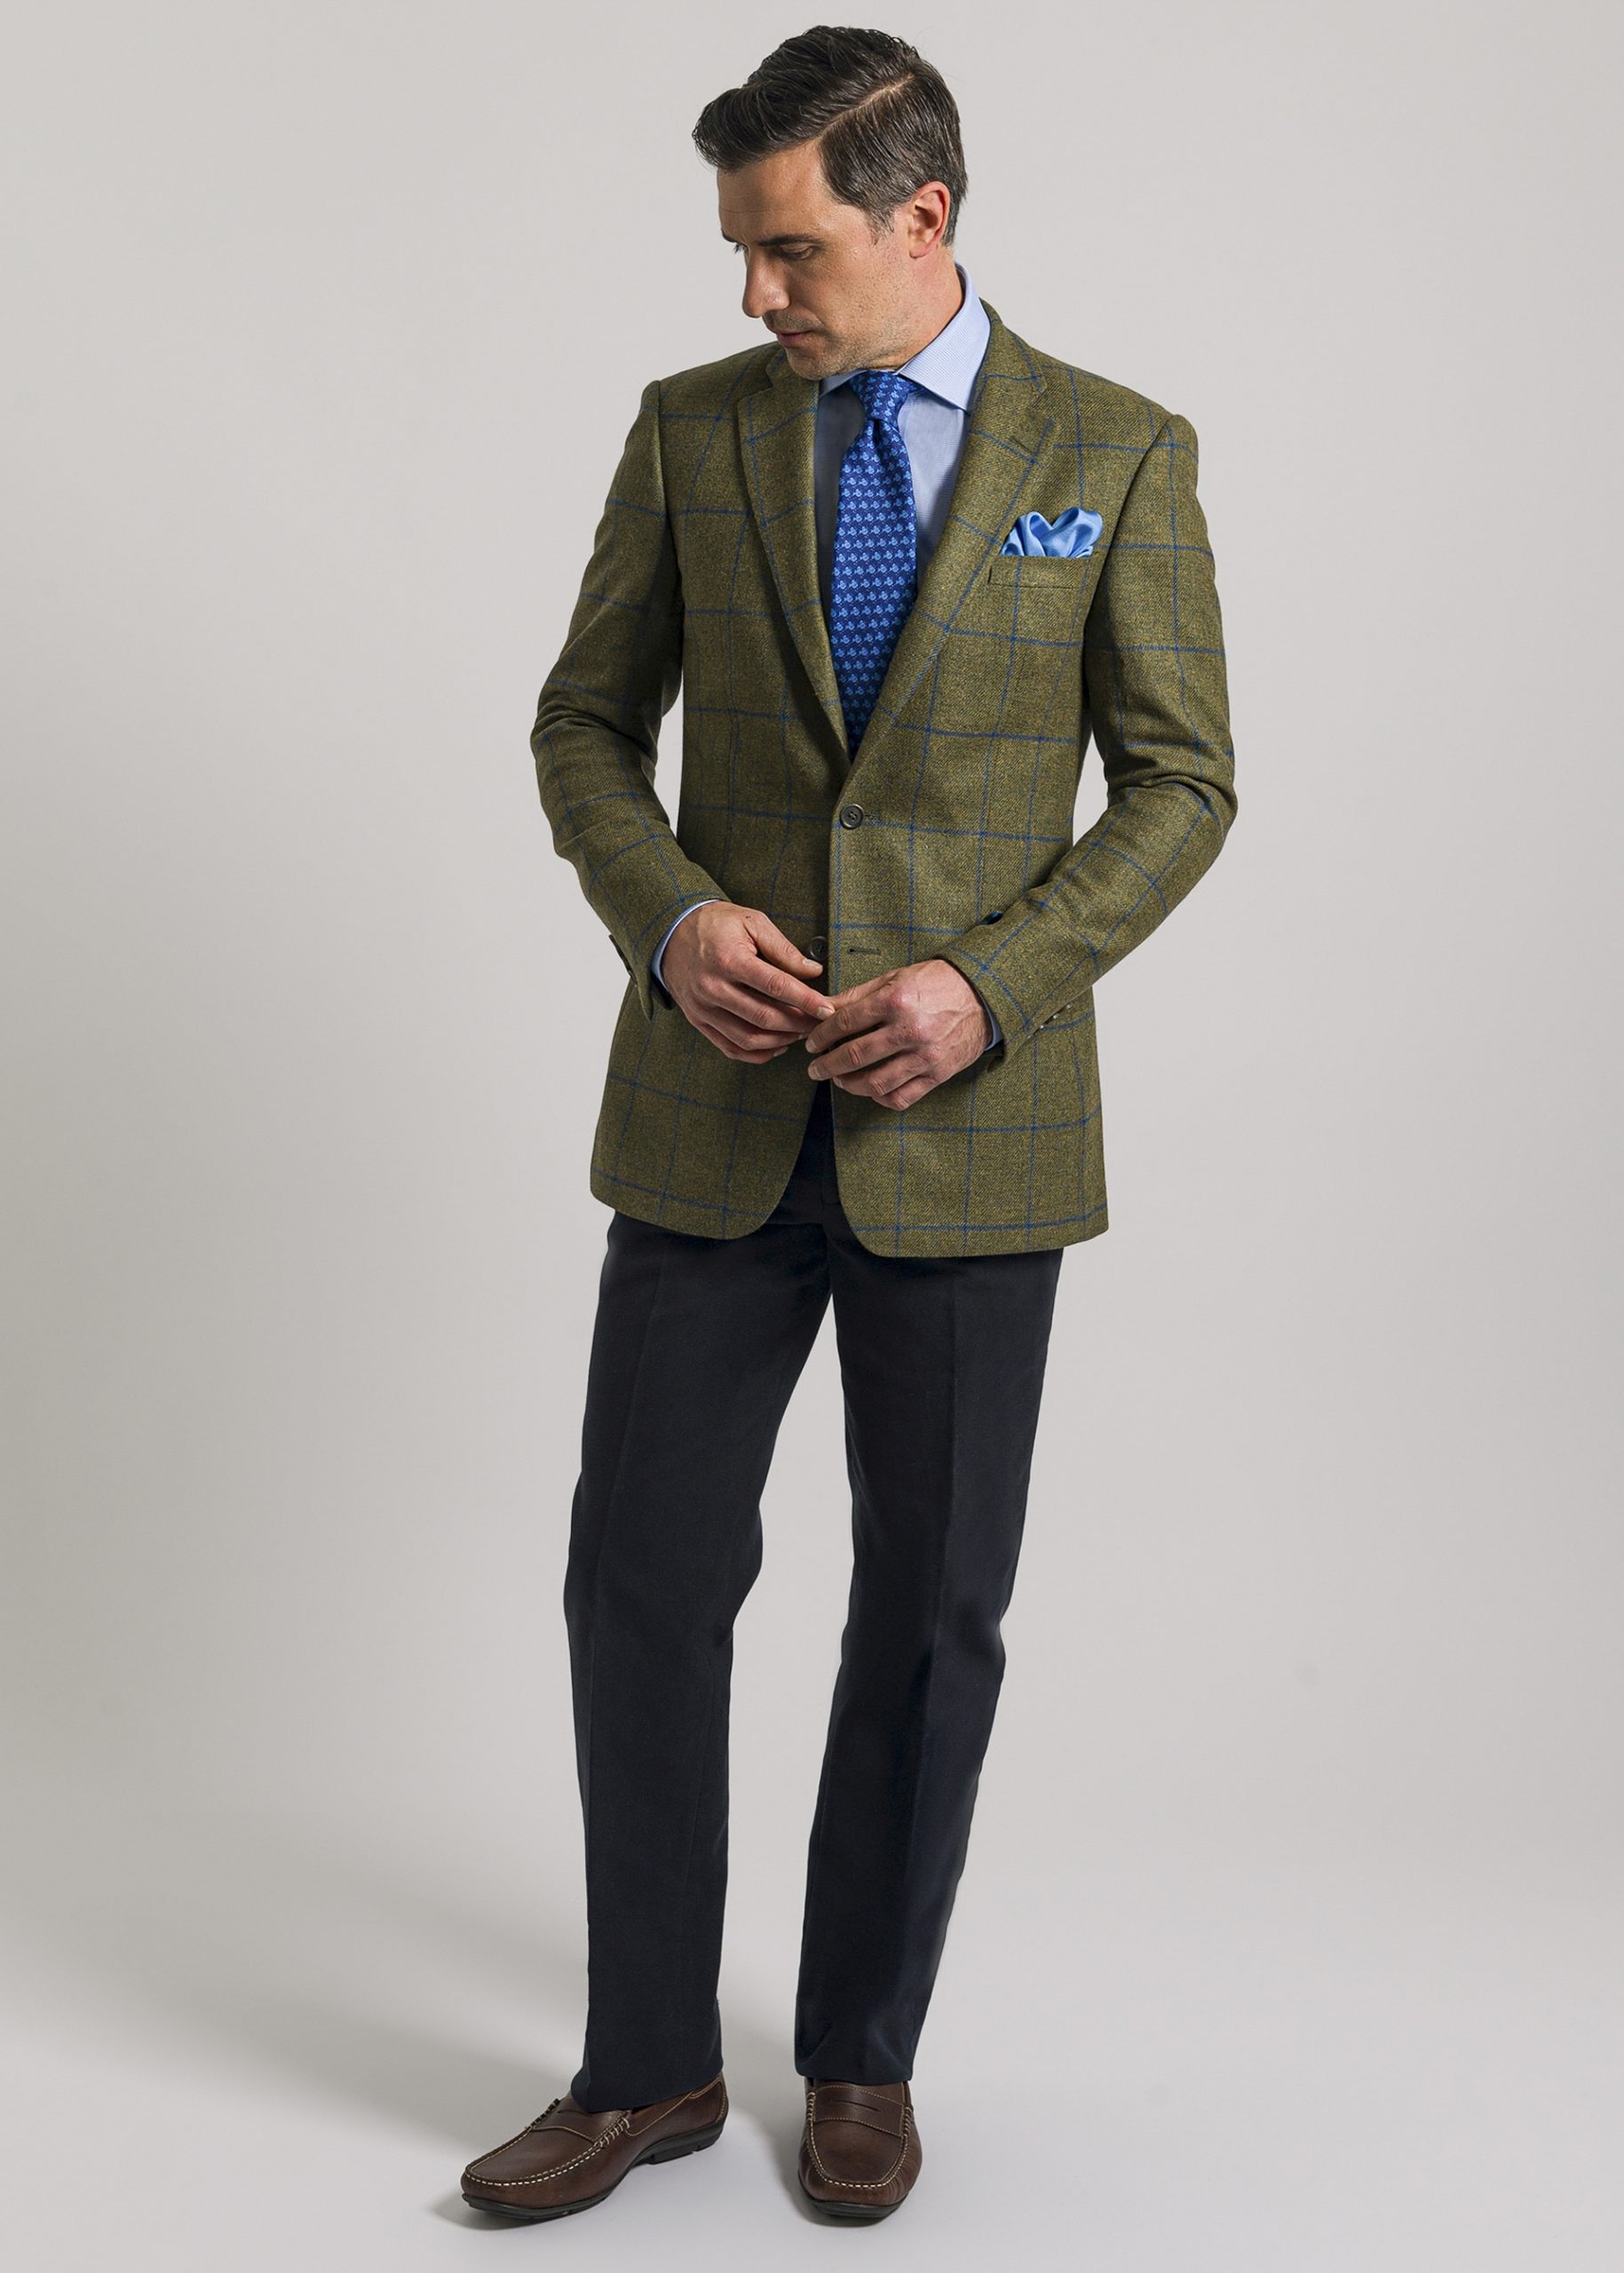 Roderick Charles green royal tweed jacket